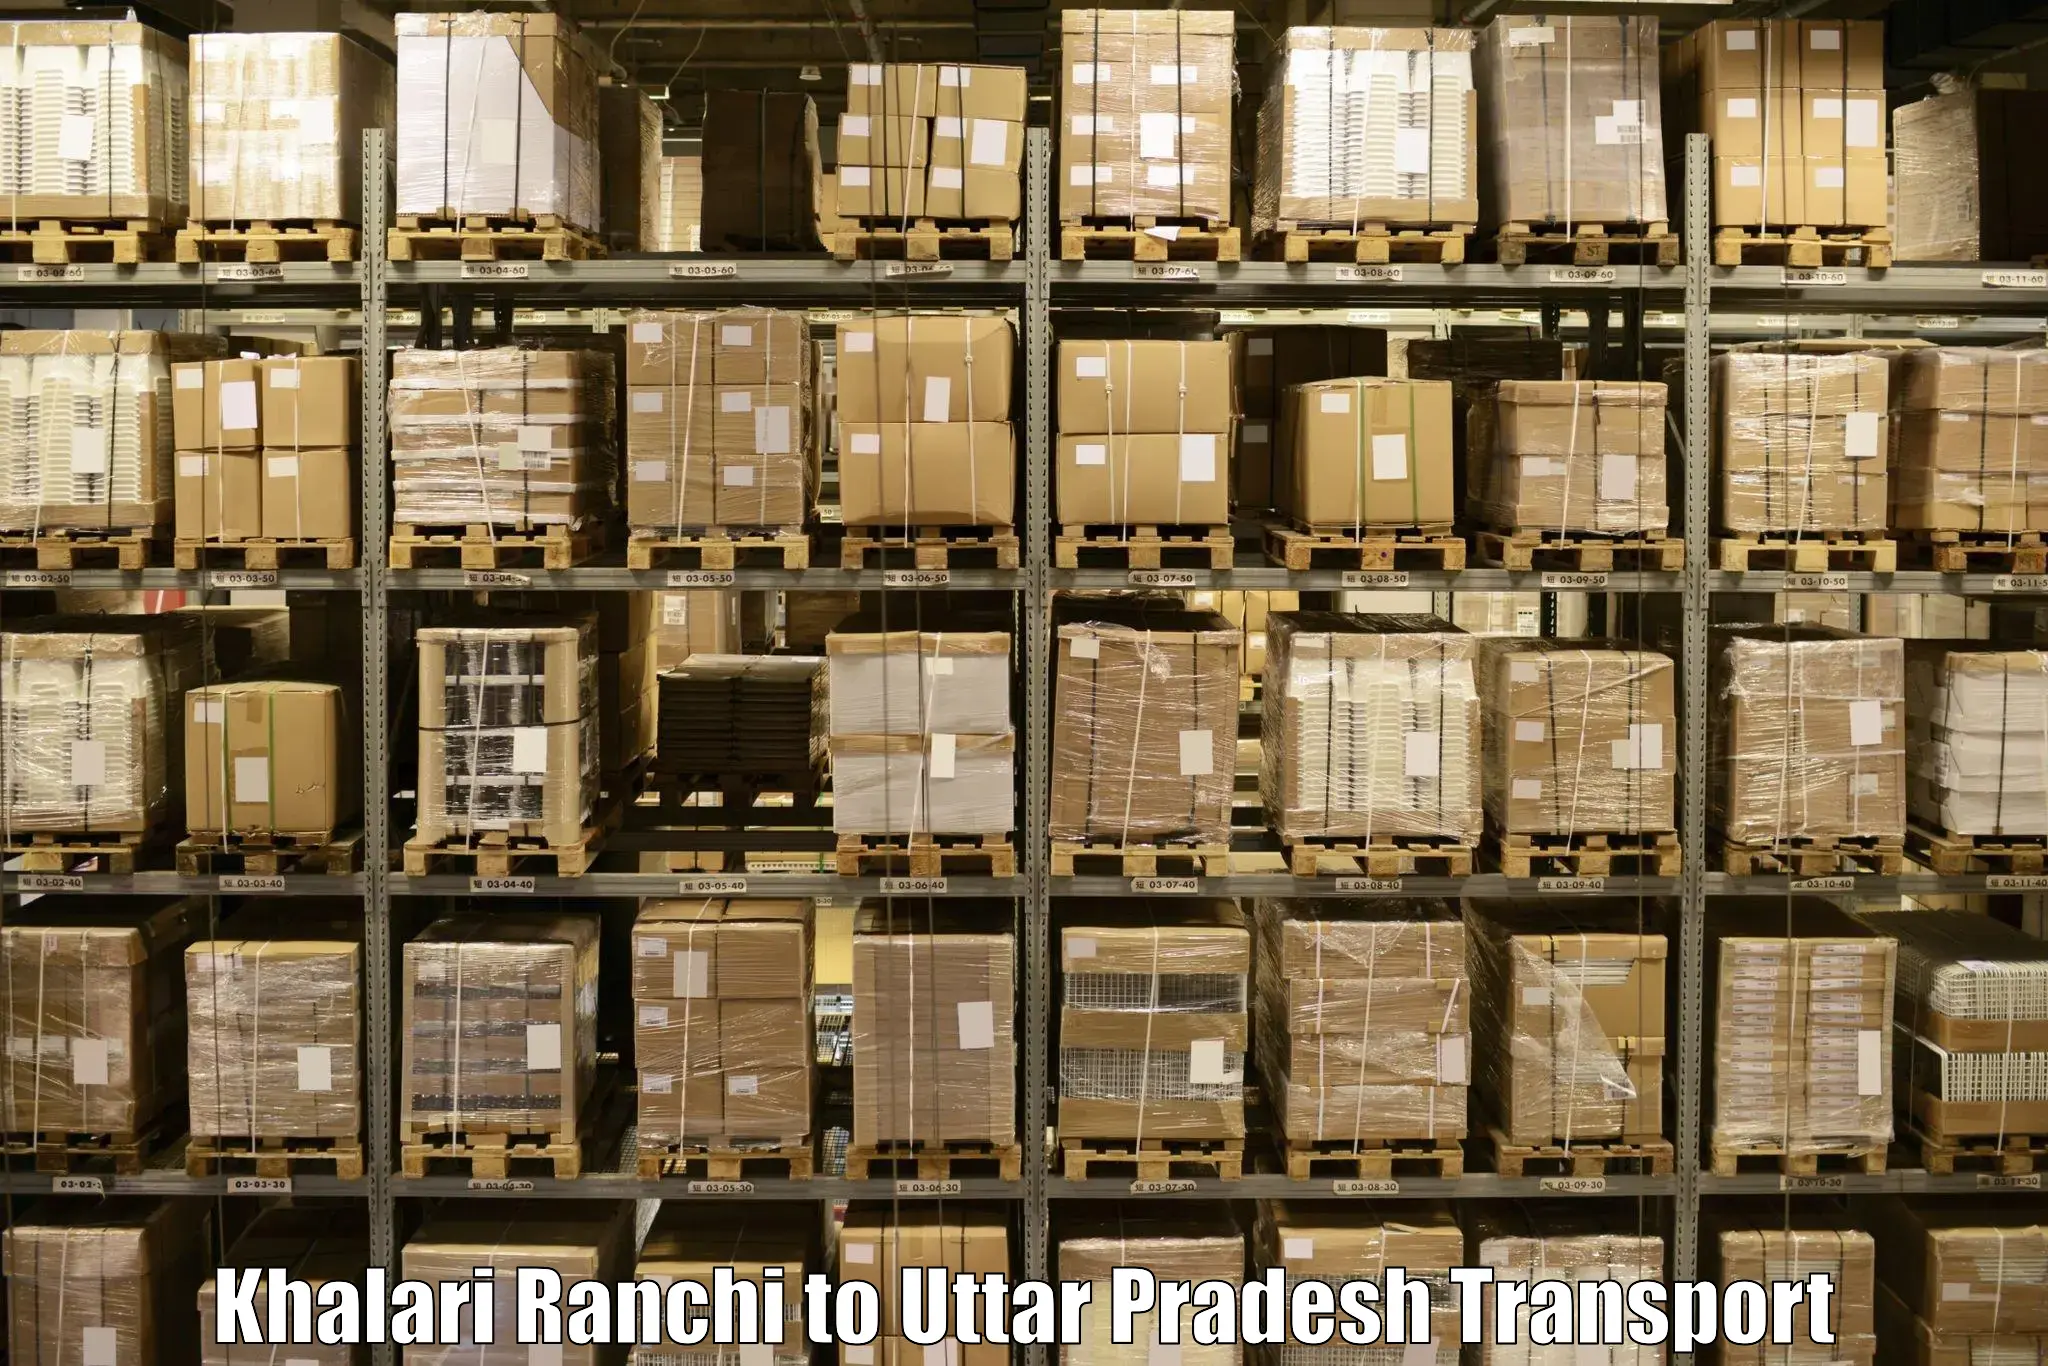 Transport bike from one state to another Khalari Ranchi to Uttar Pradesh